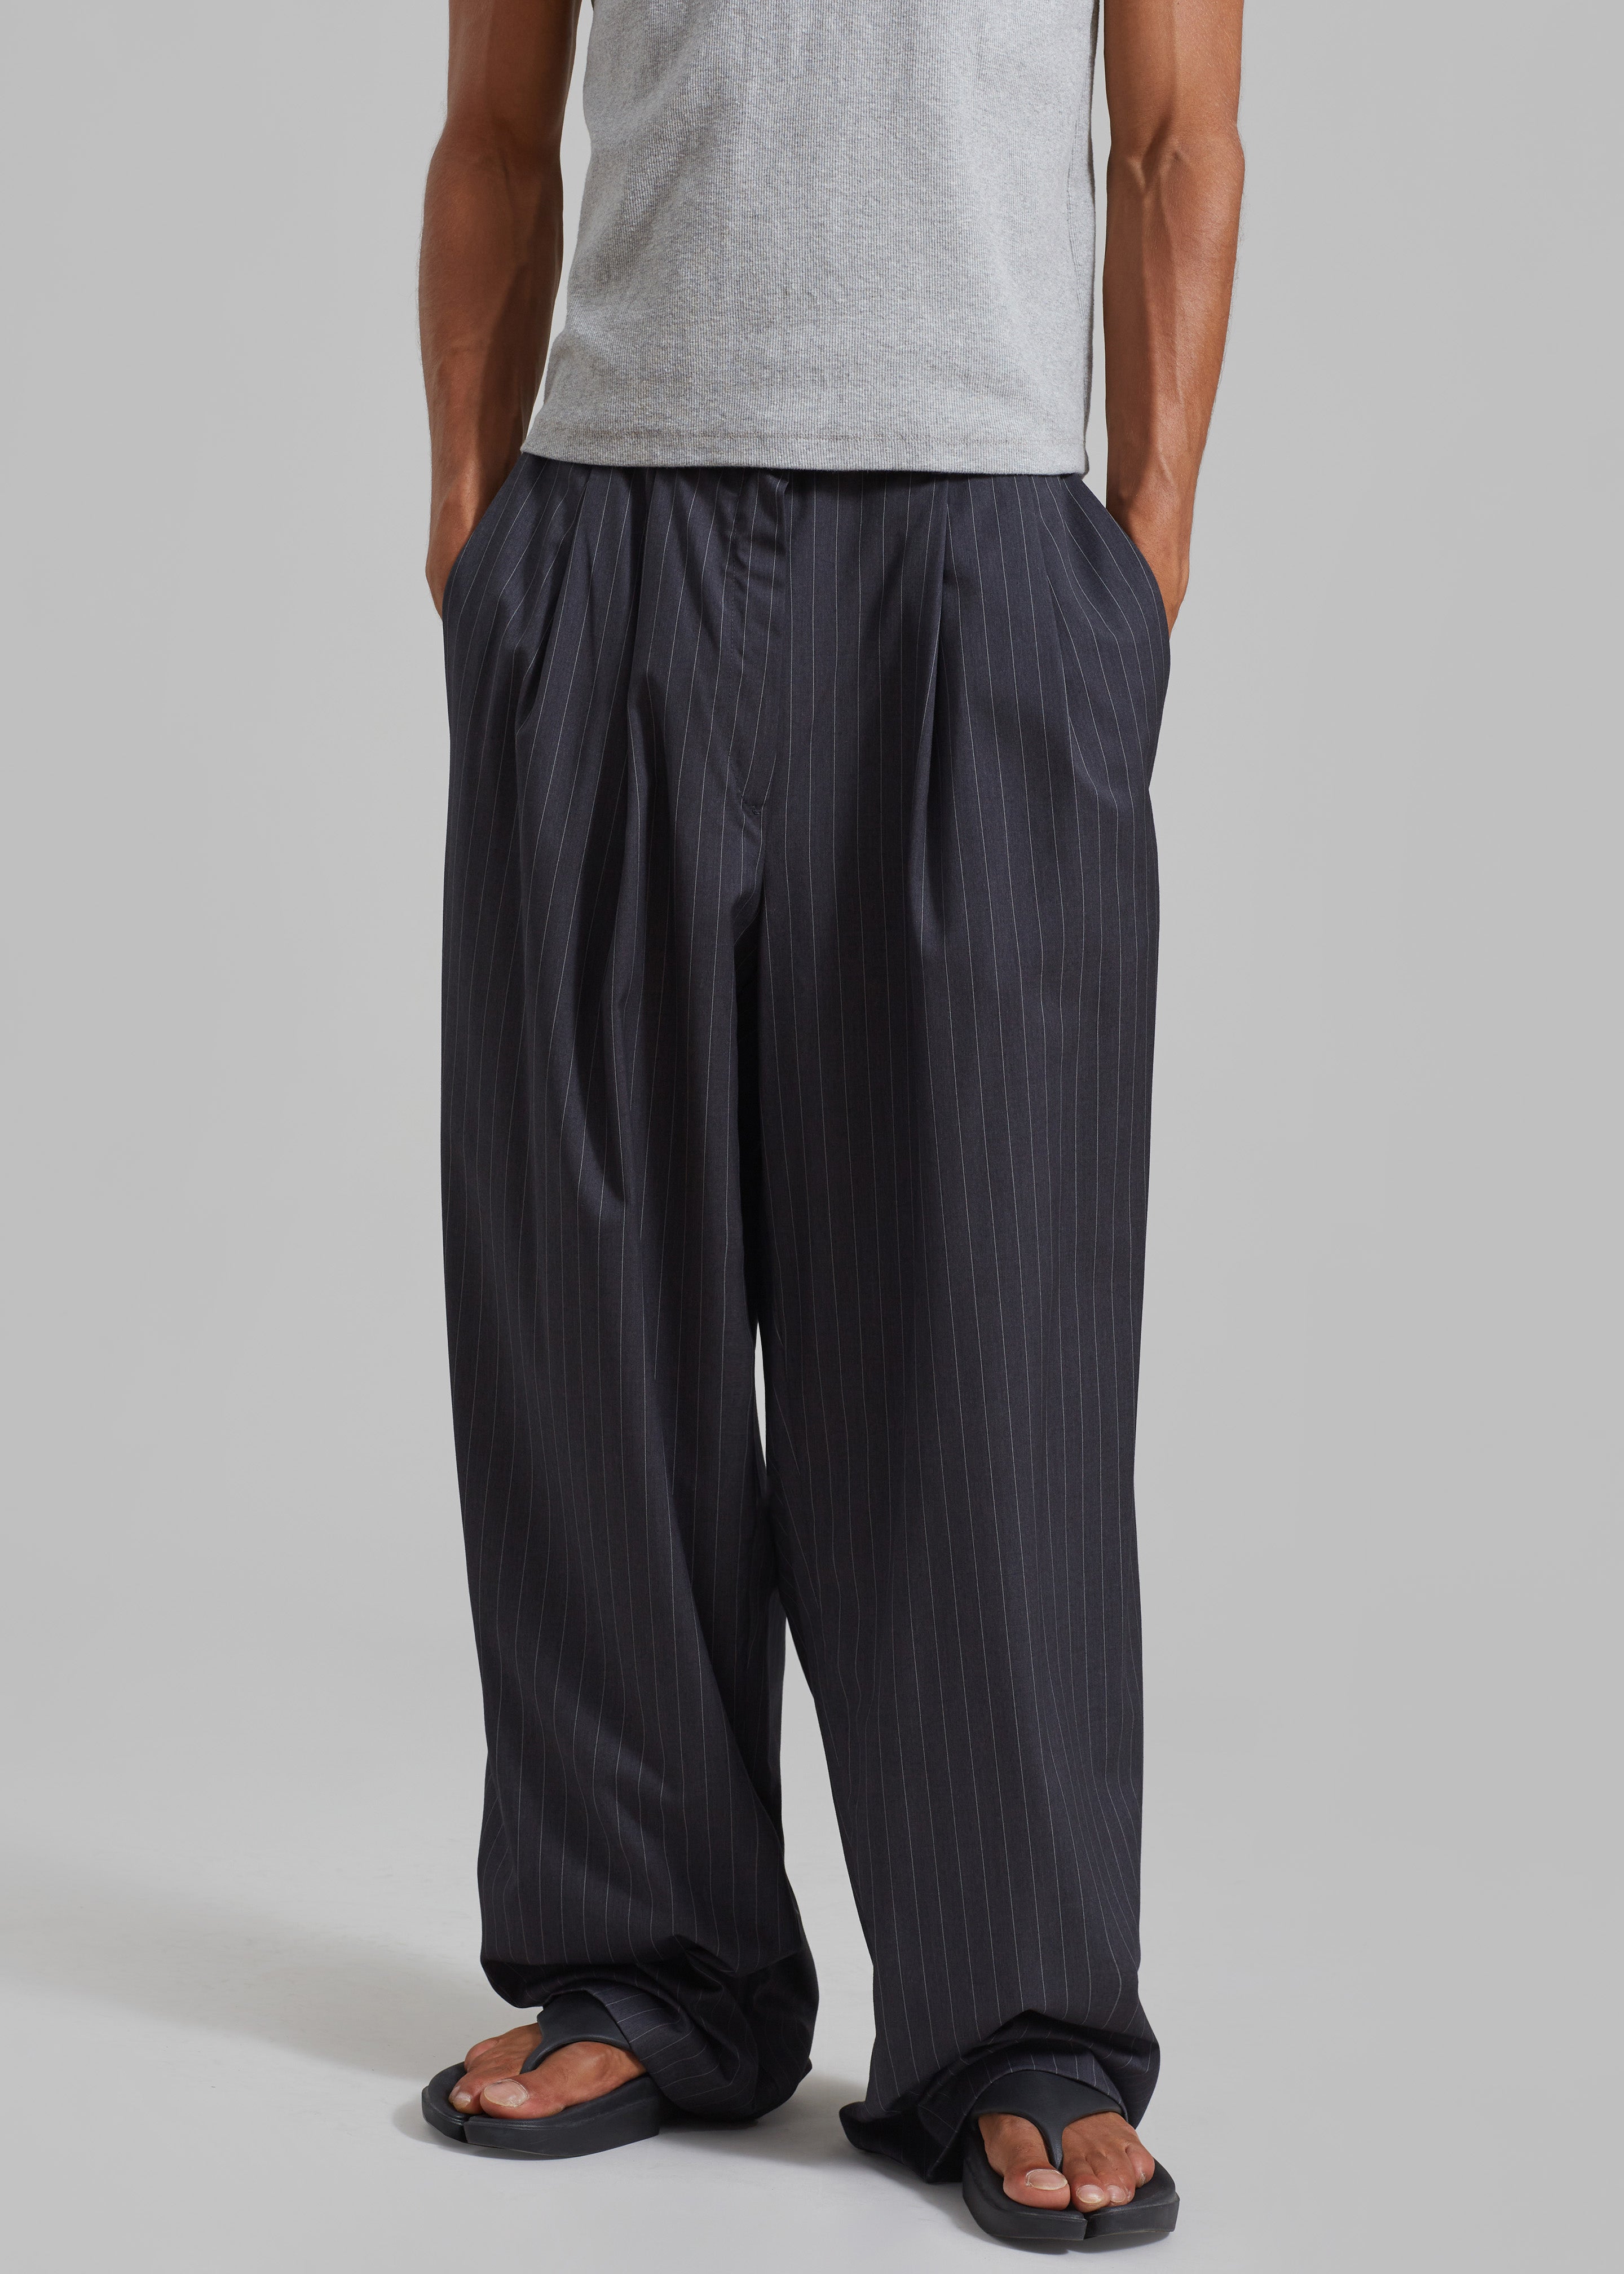 Peyton Pleated Pants - Grey Pinstripe - 2